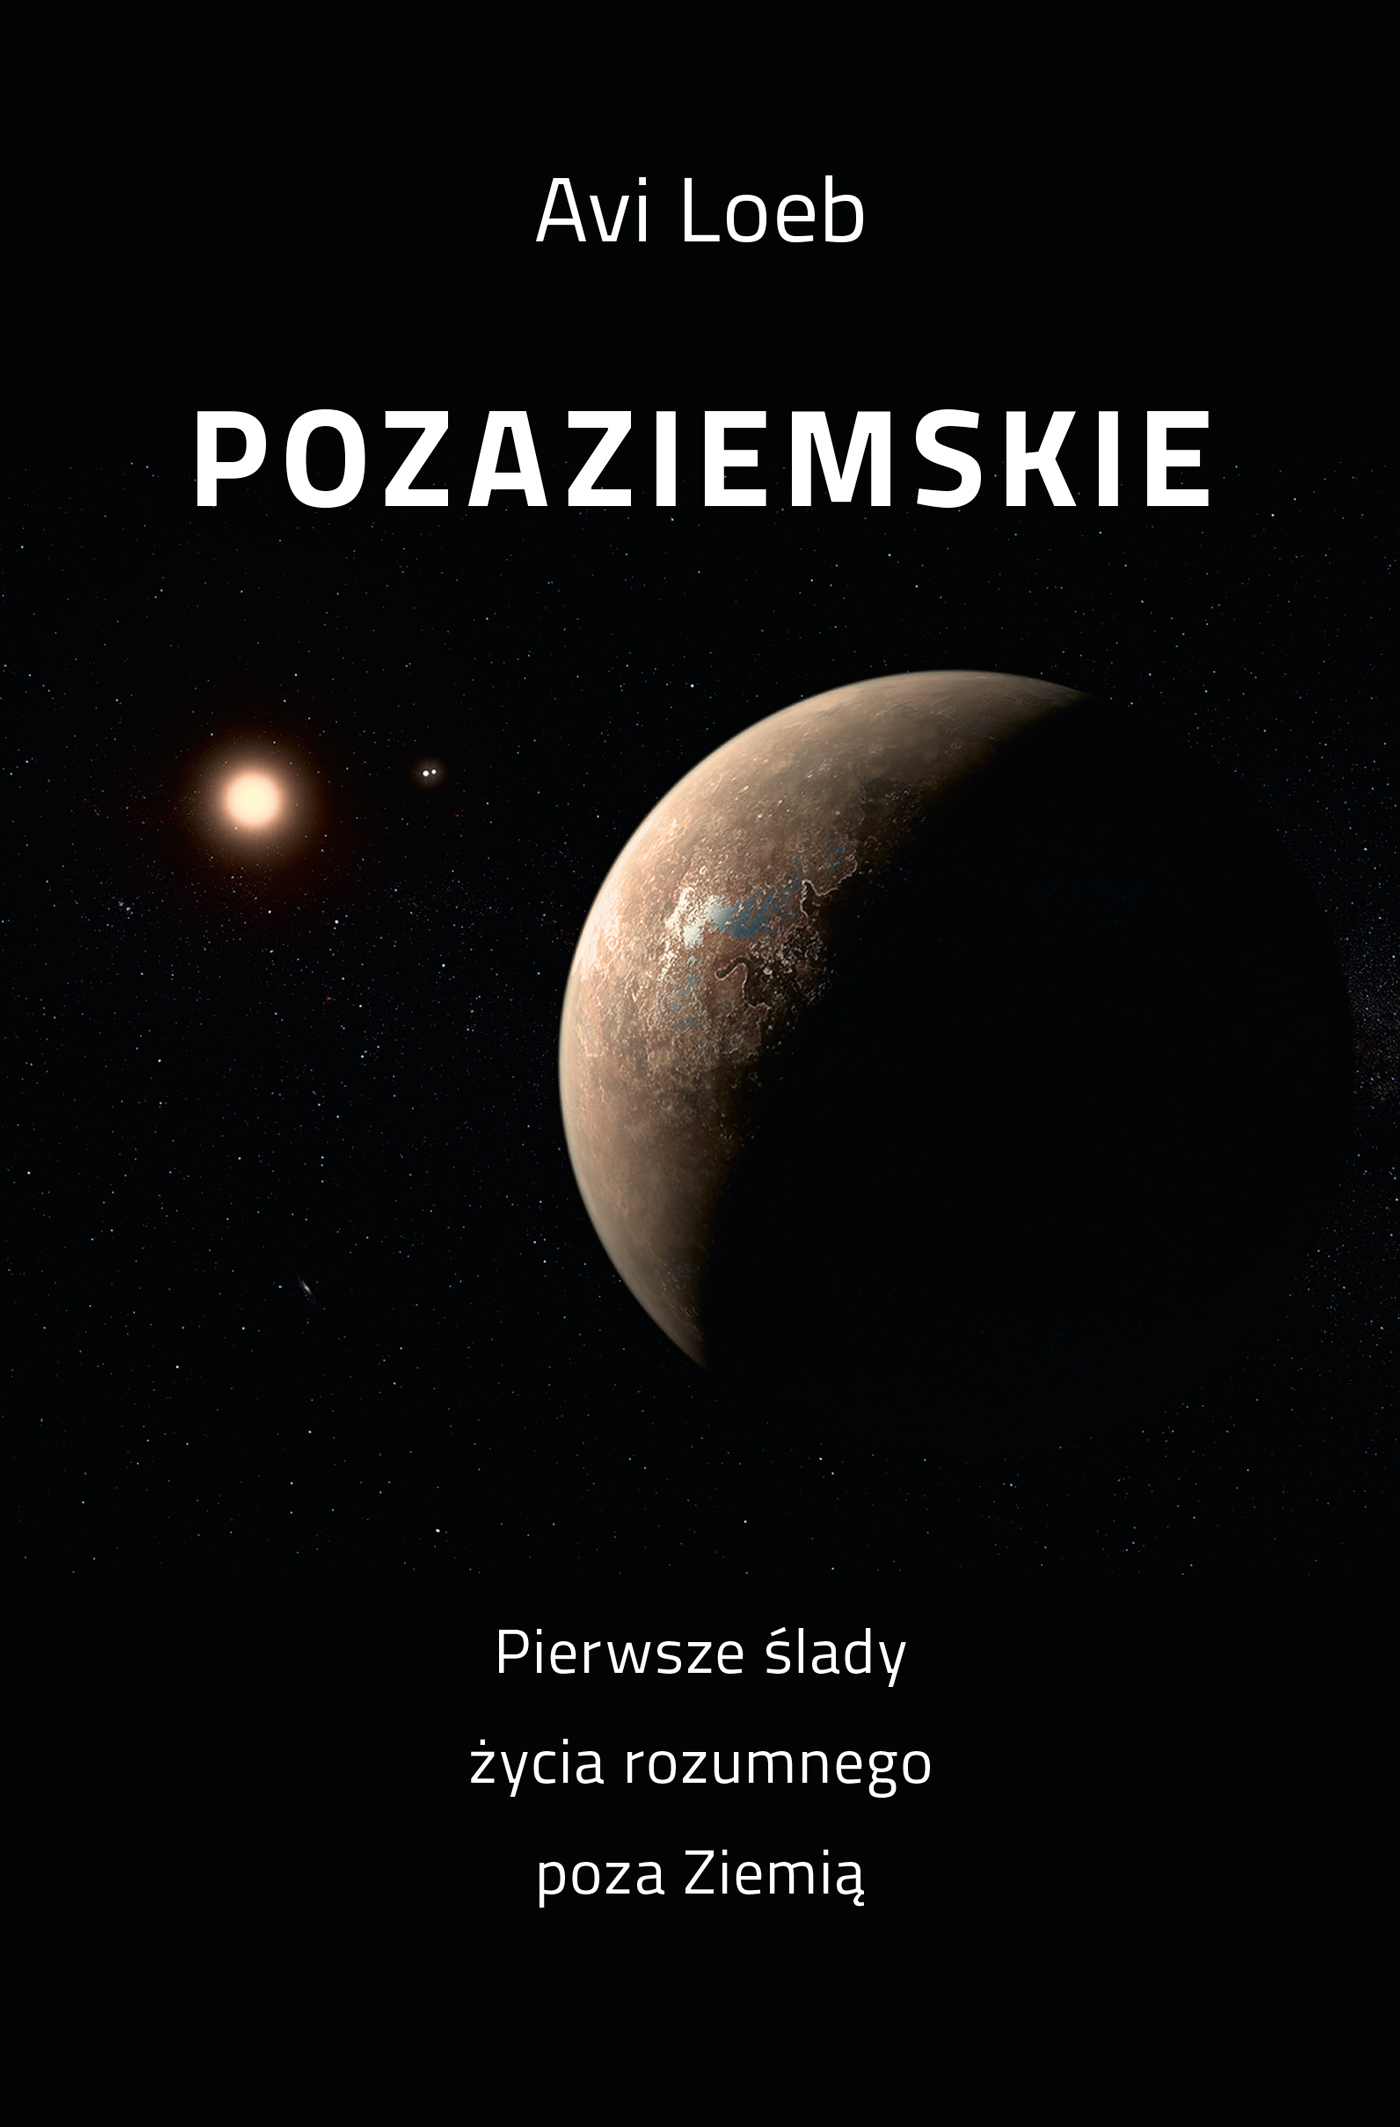  astronomia24